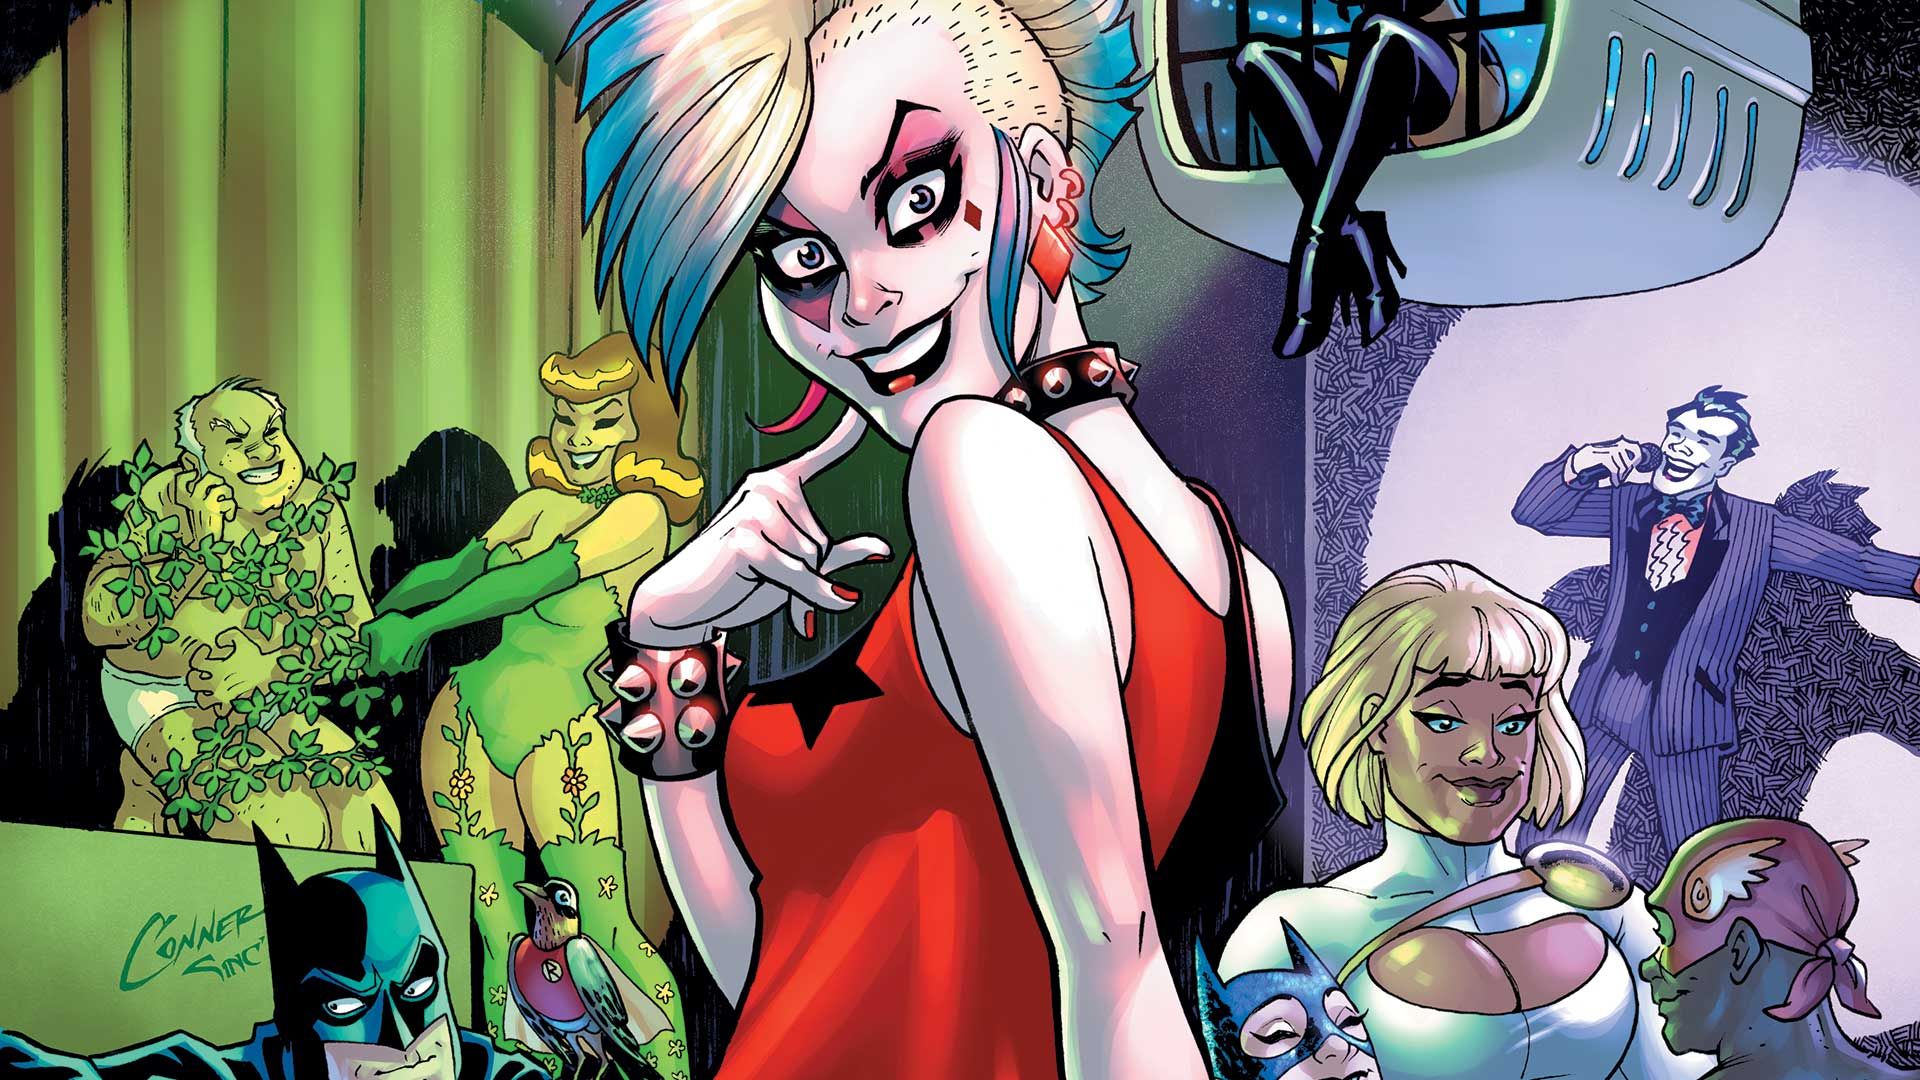 Harley Quinn #7